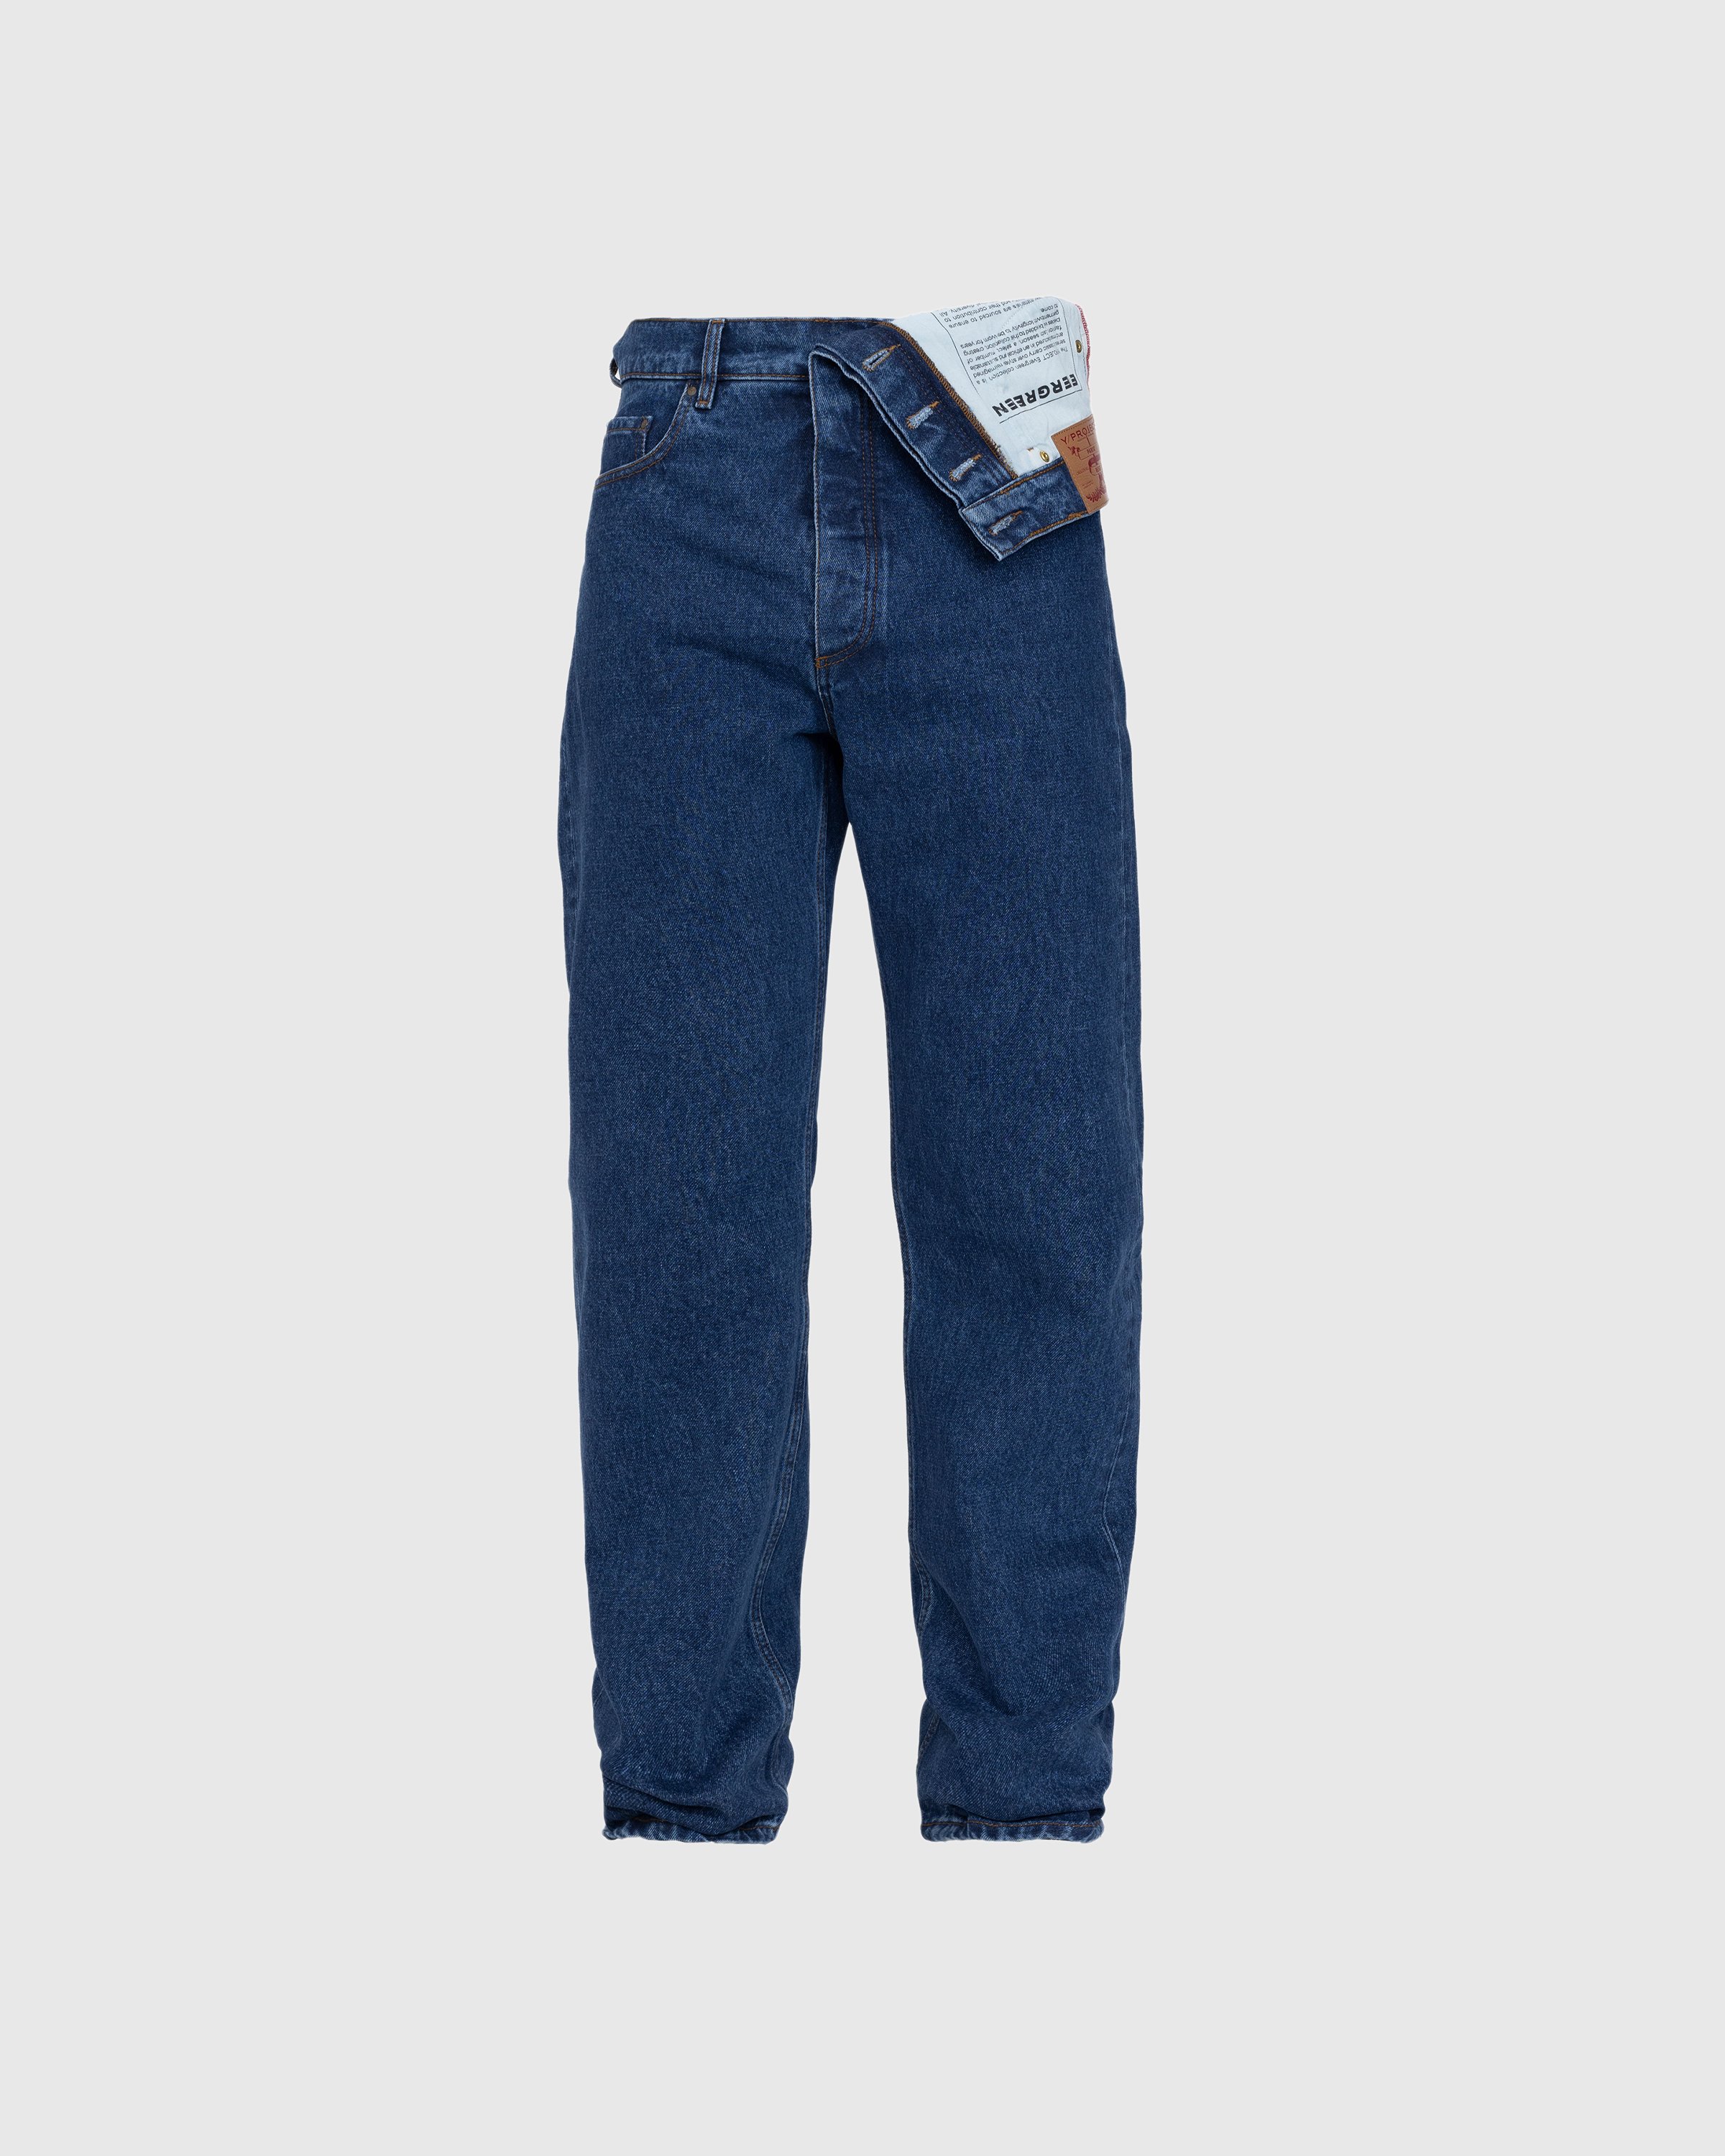 Y/Project – Classic Asymmetric Waist Jeans Blue | Highsnobiety Shop